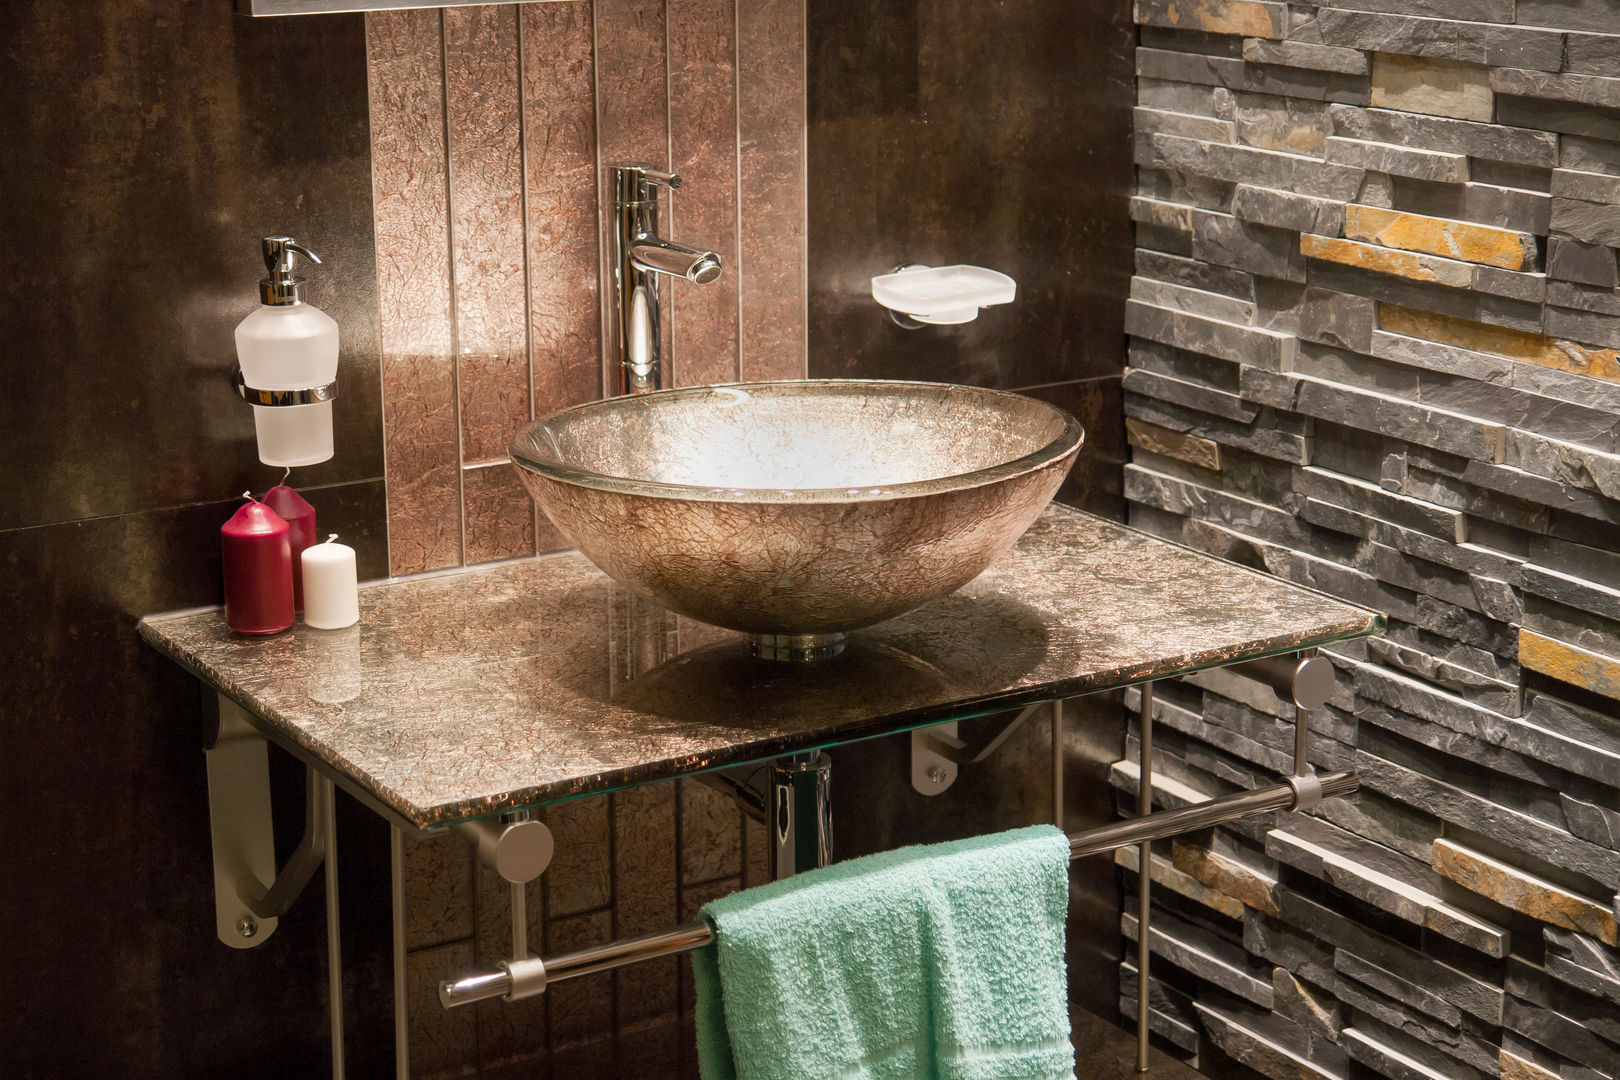 Exposed Brick, Statement Sink Gracious Luxury Interiors Ванная в стиле лофт